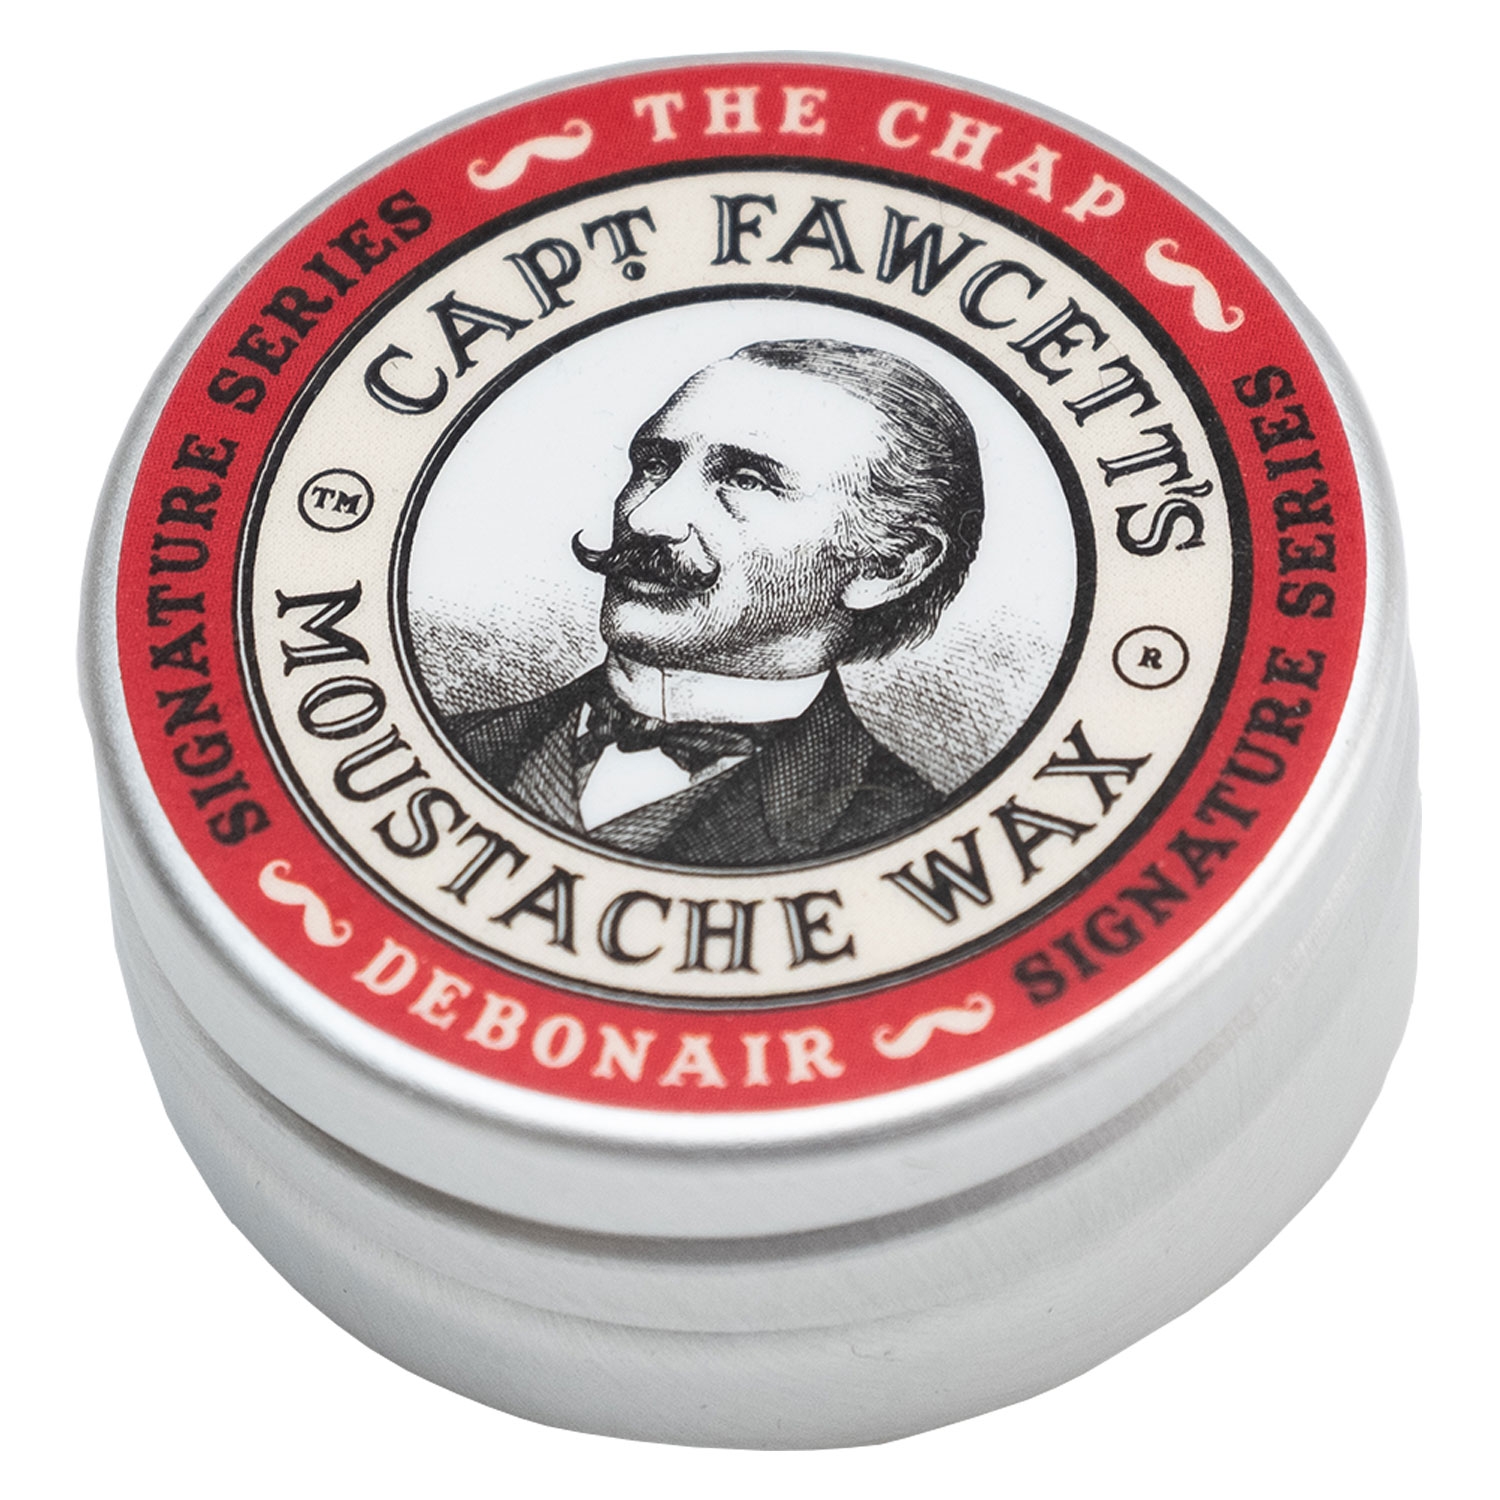 Product image from Capt. Fawcett Care - The Chap Debonair Moustache Wax